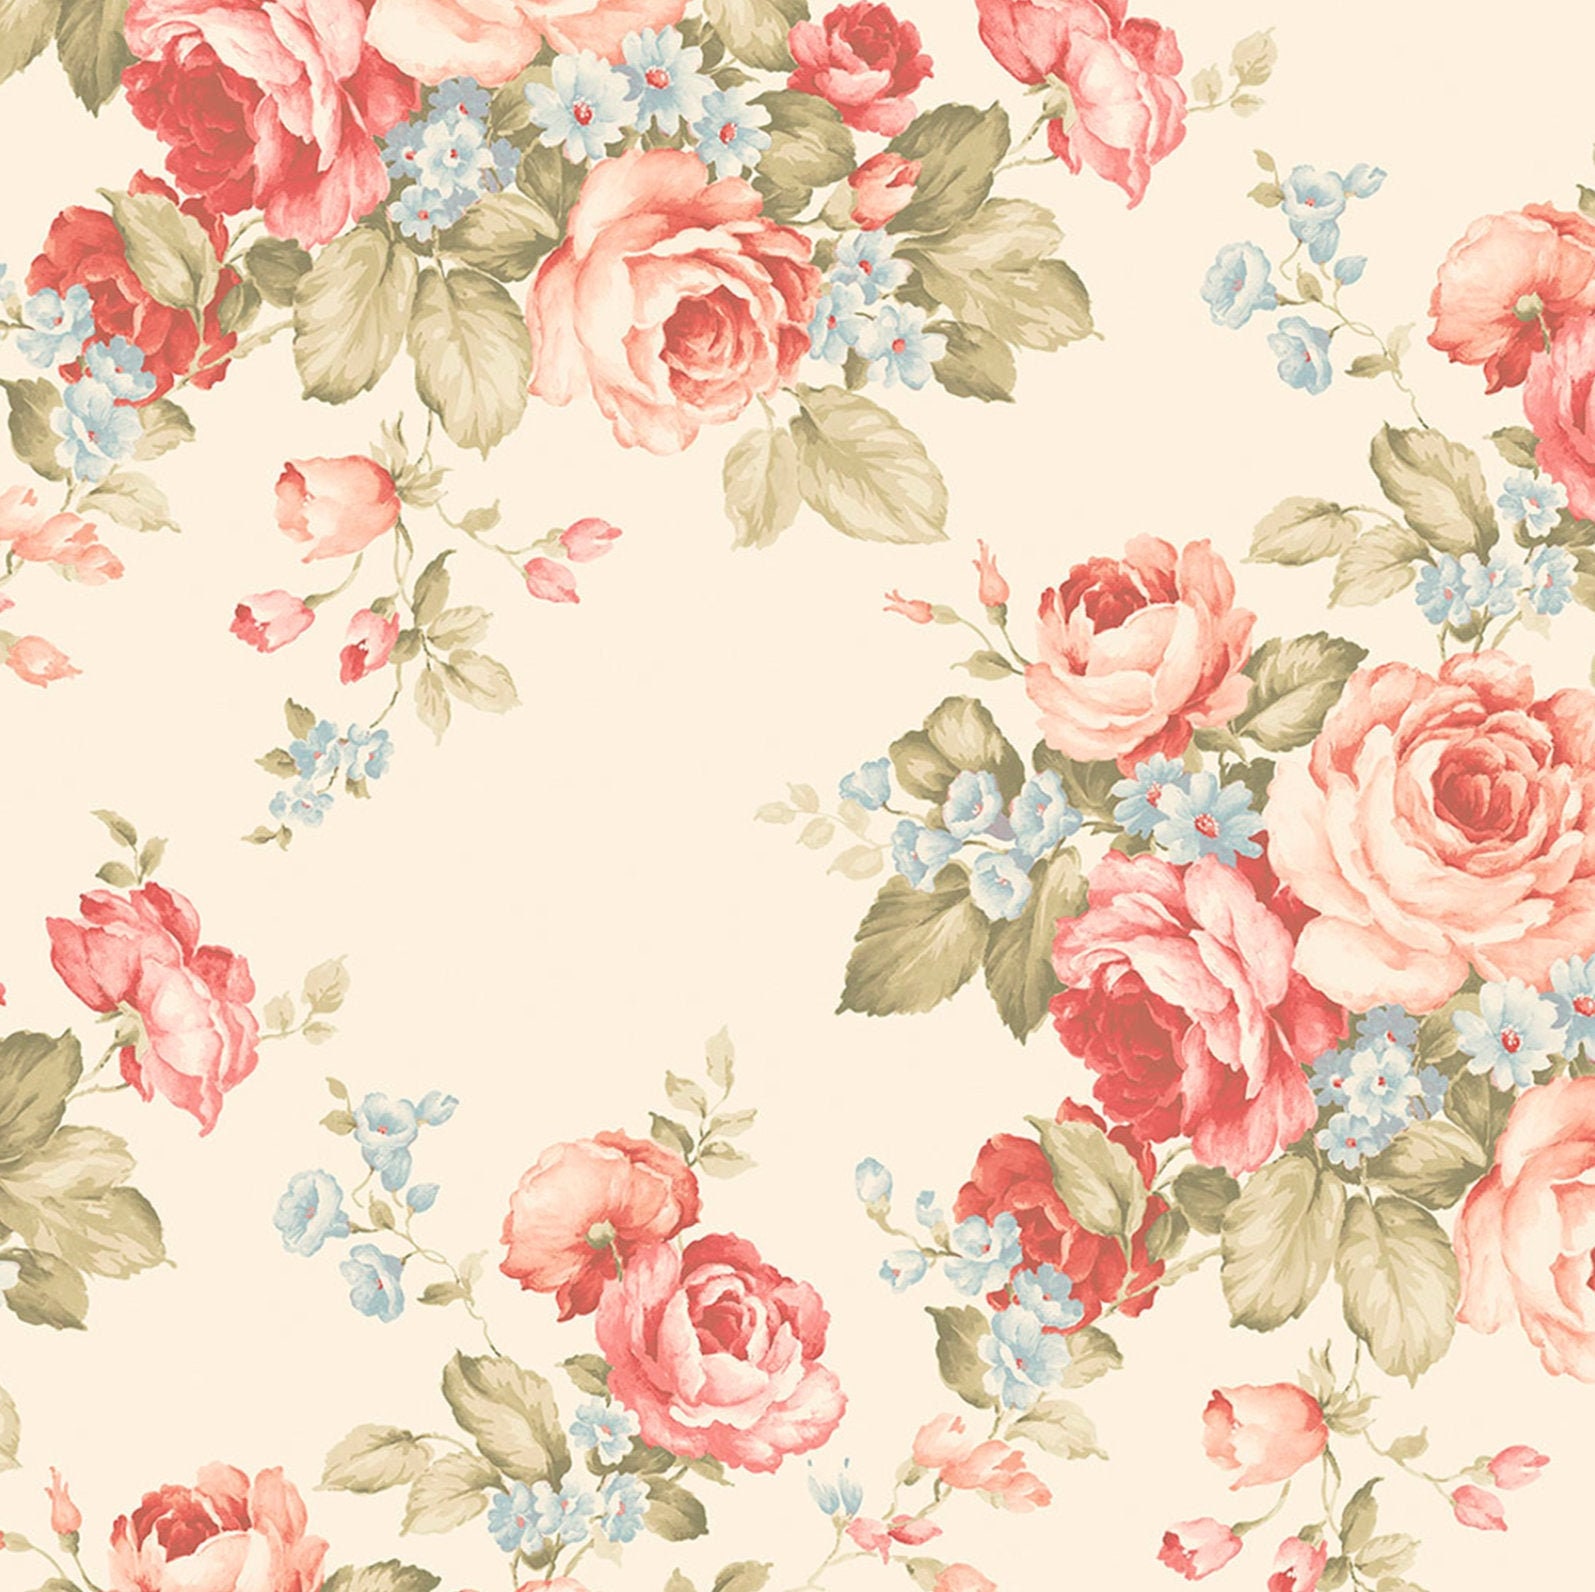 vintage floral wallpaper images  Google Search  Vintage floral wallpapers  Floral wallpaper Flower wallpaper